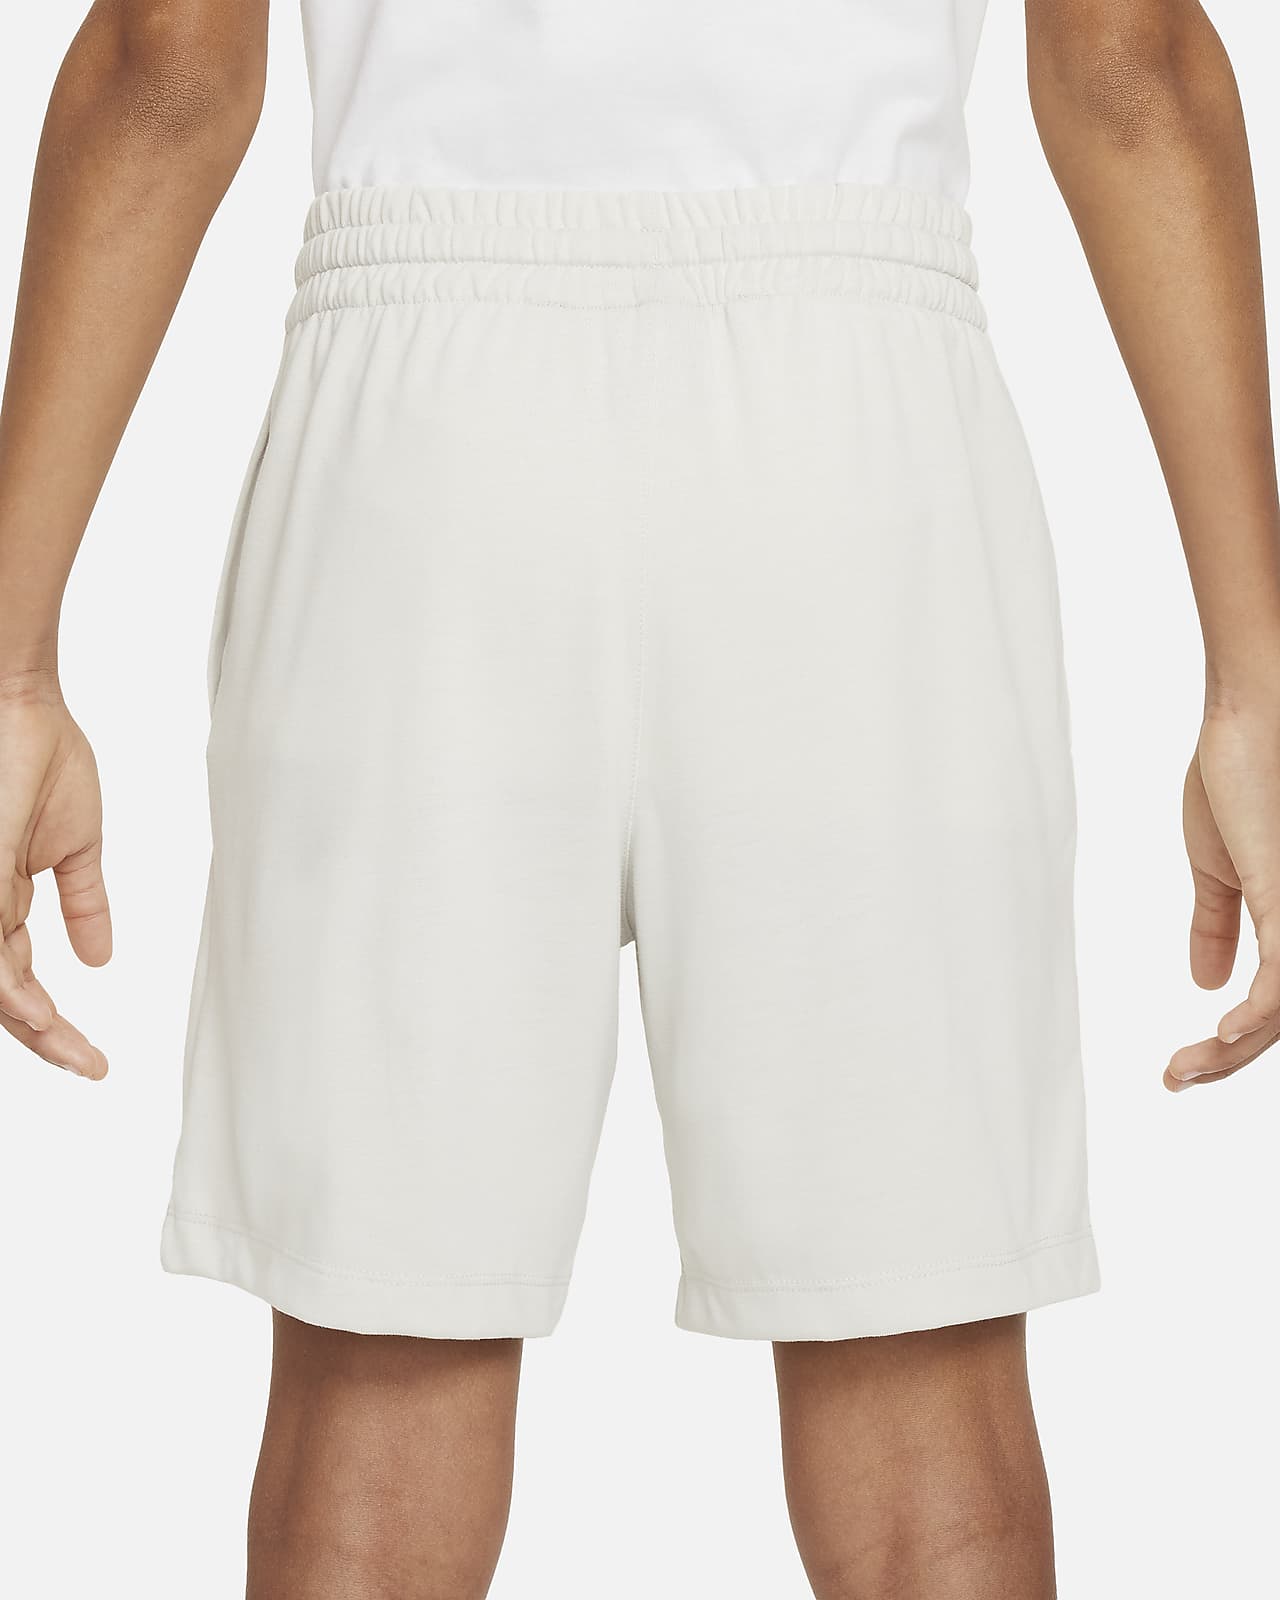 Nike Jersey Big Kids\' (Boys\') Shorts.